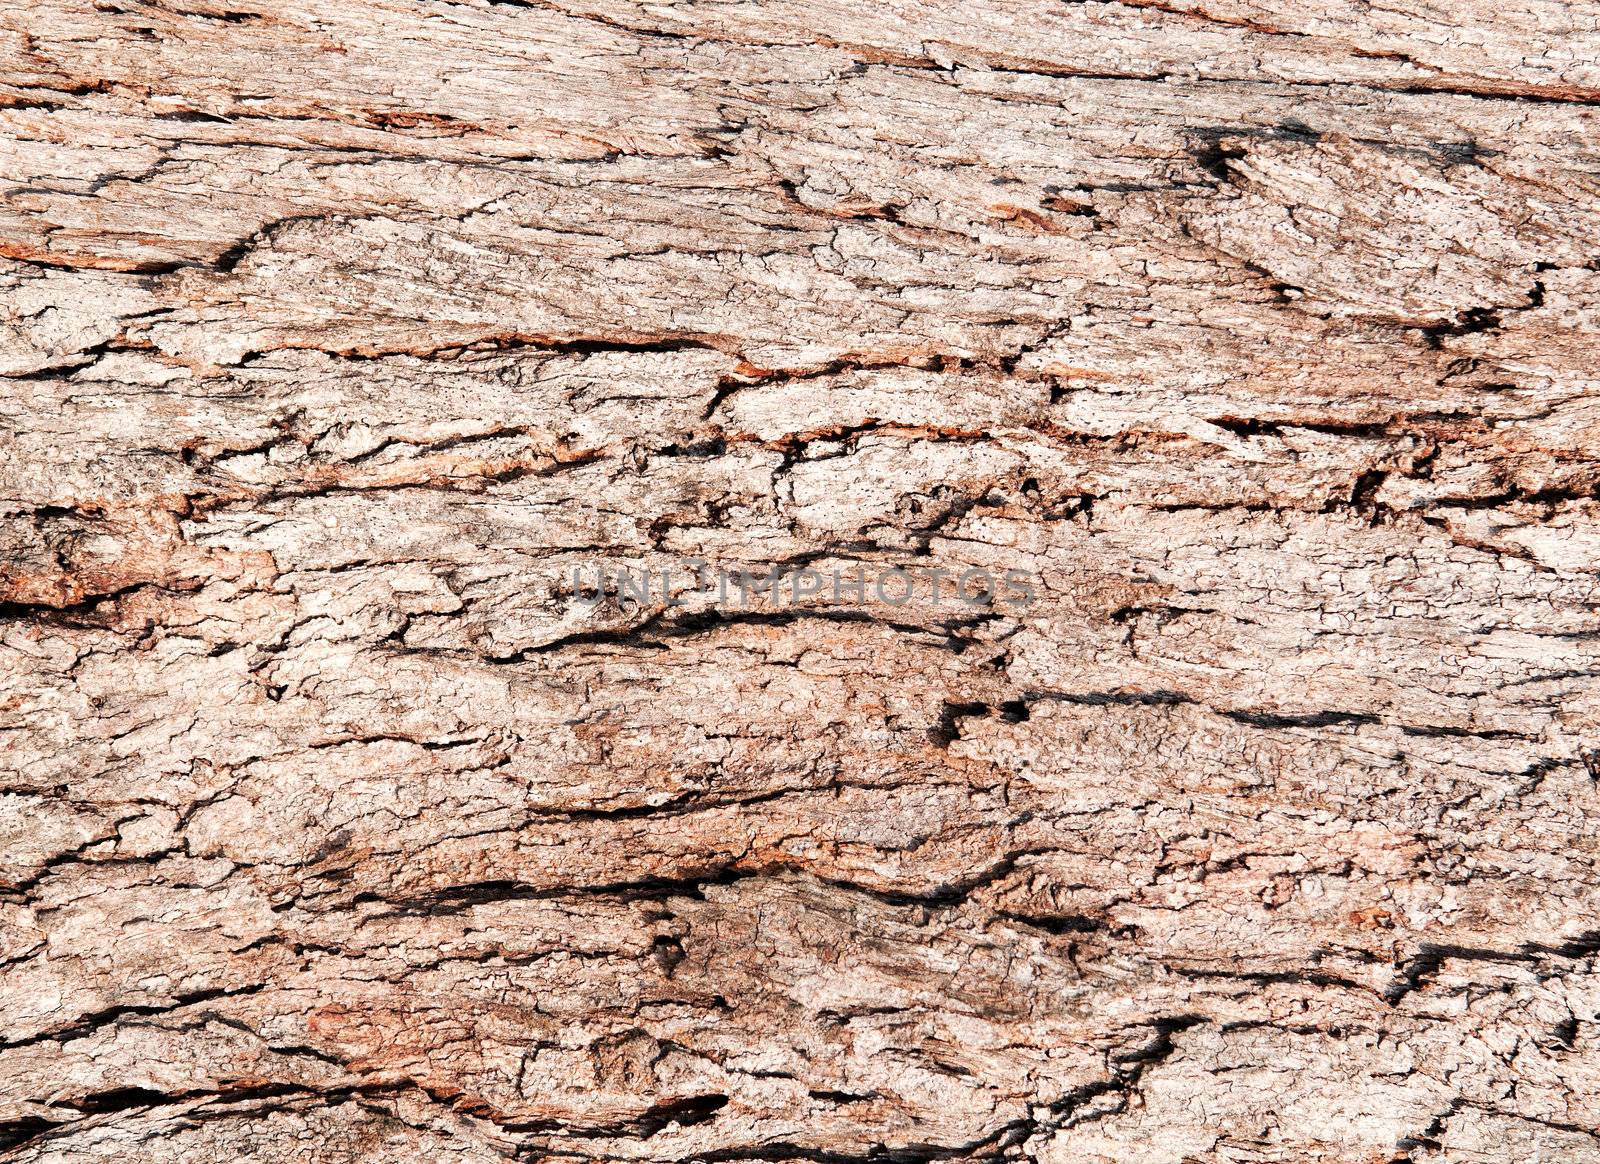 Tree bark texture of an old tree.